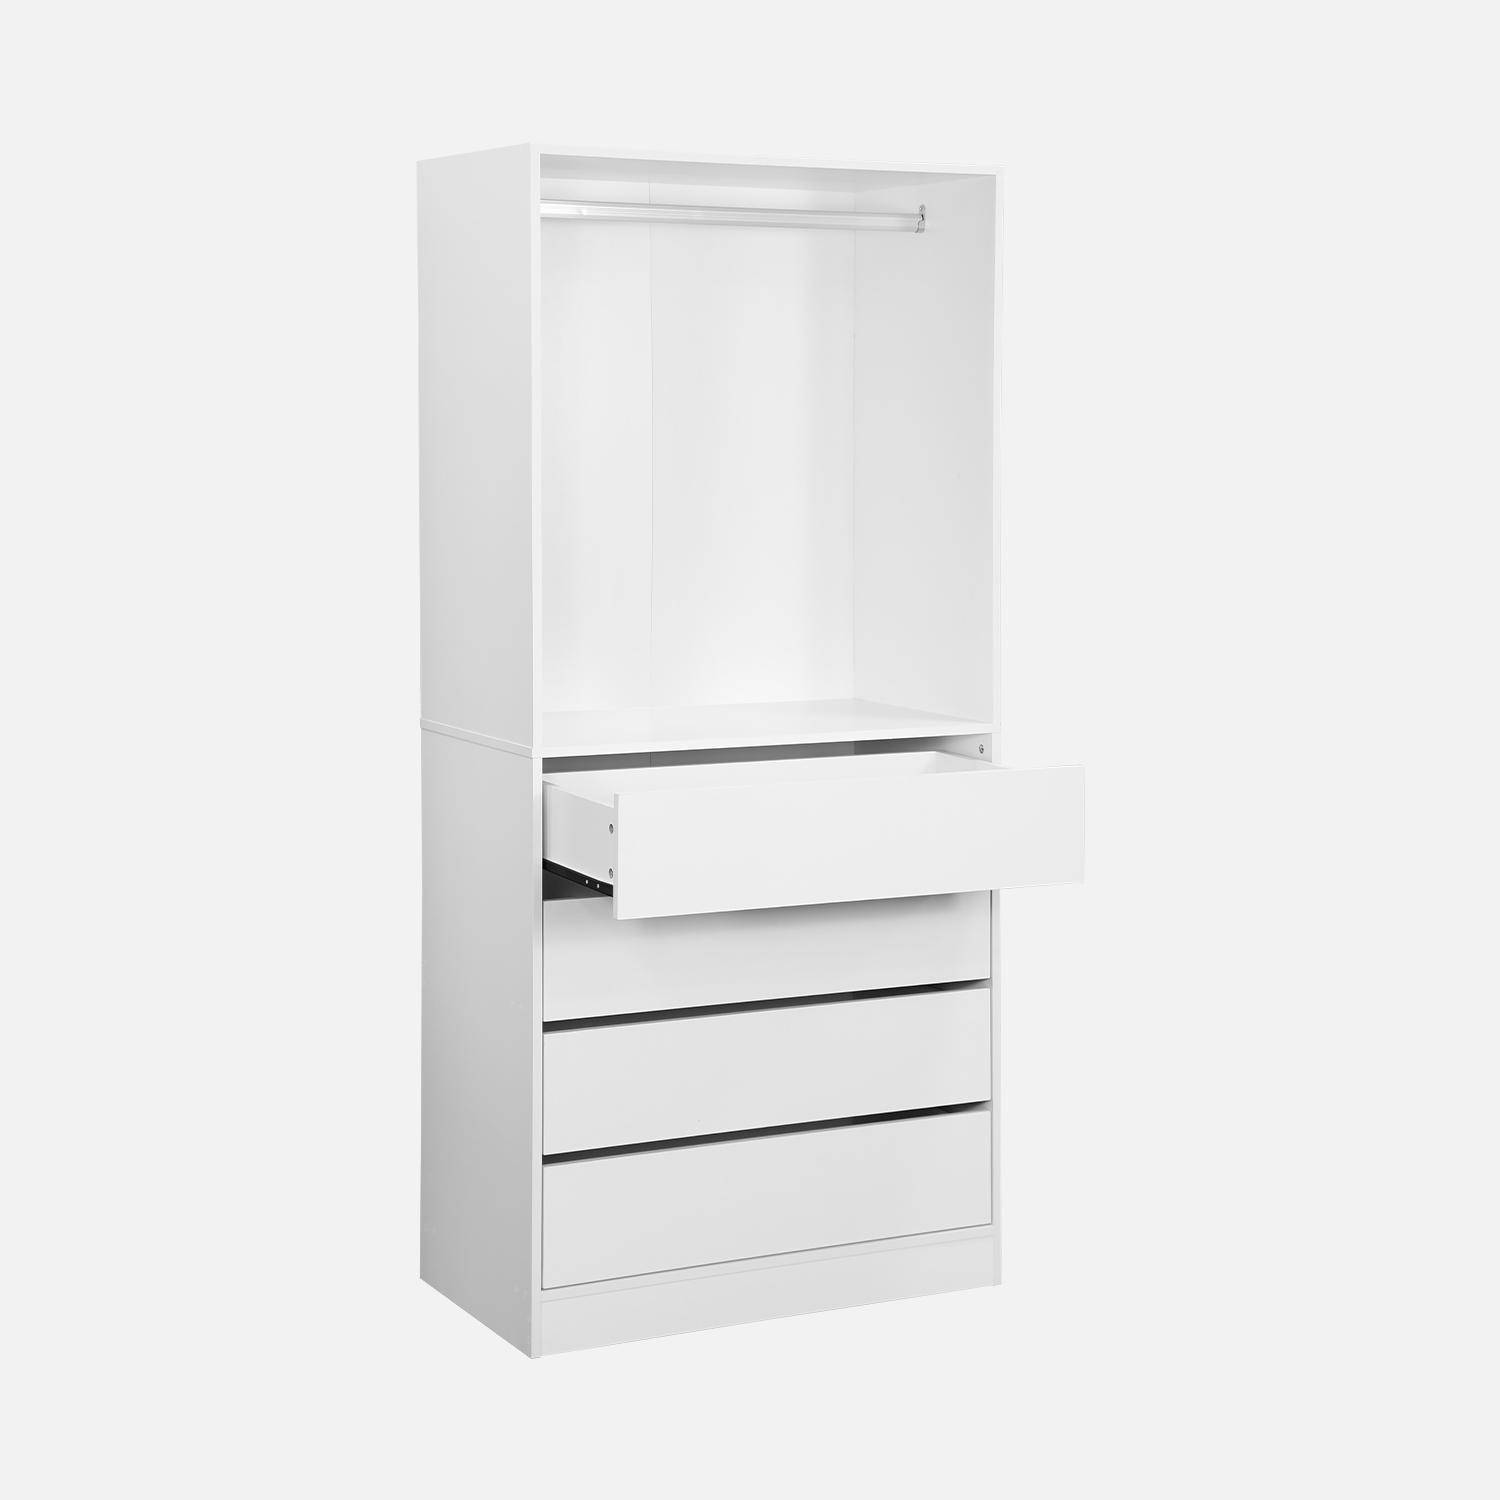 Modulo armadio con 4 cassetti e 1 armadio, bianco, pannelli laminati,sweeek,Photo6